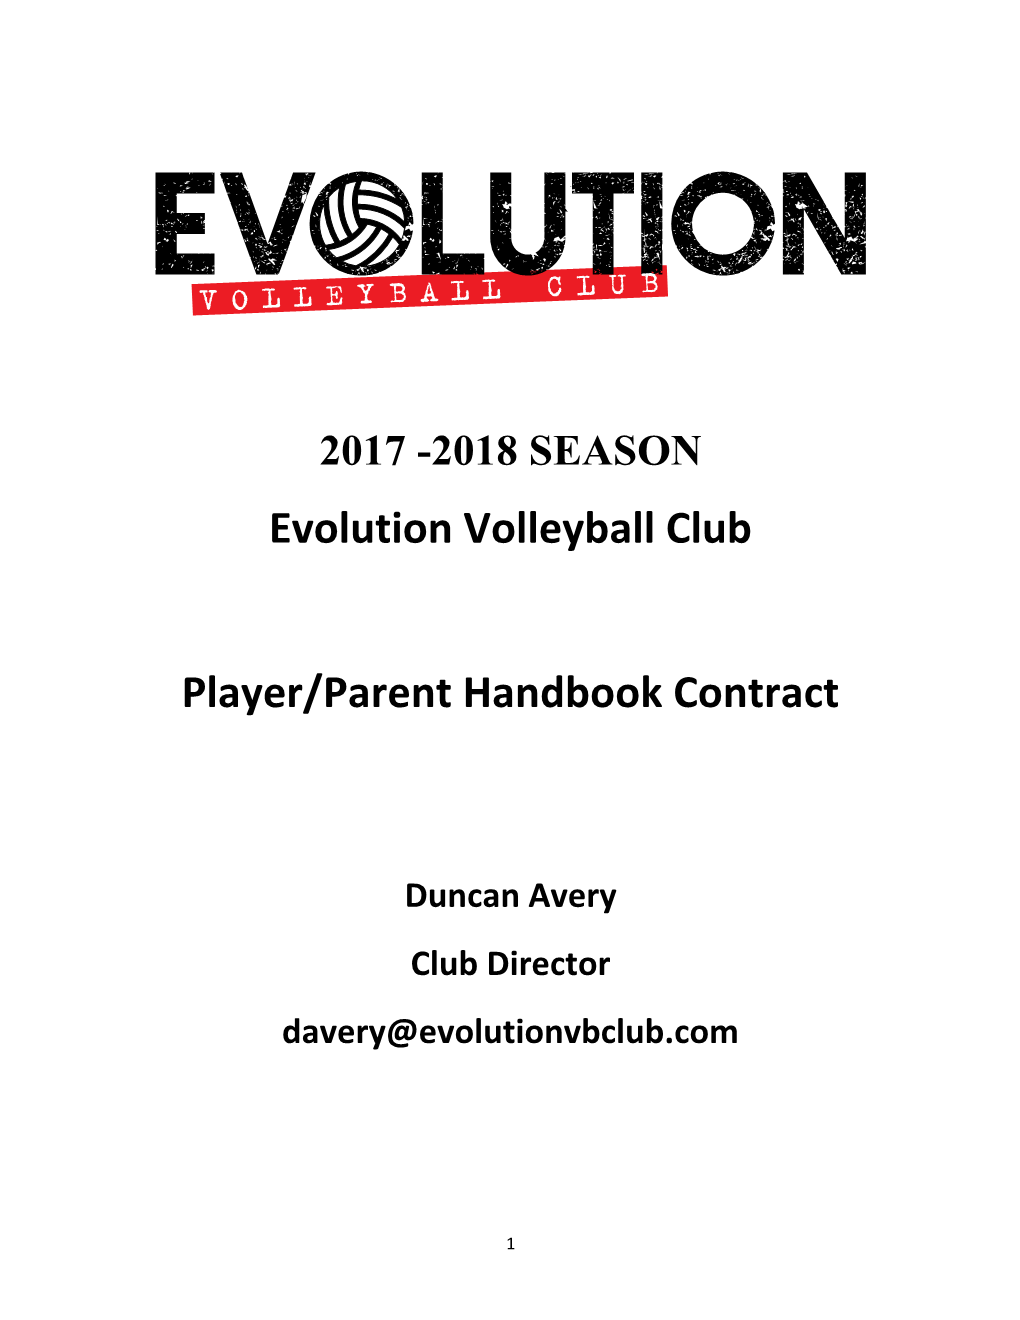 Player/Parent Handbook Contract